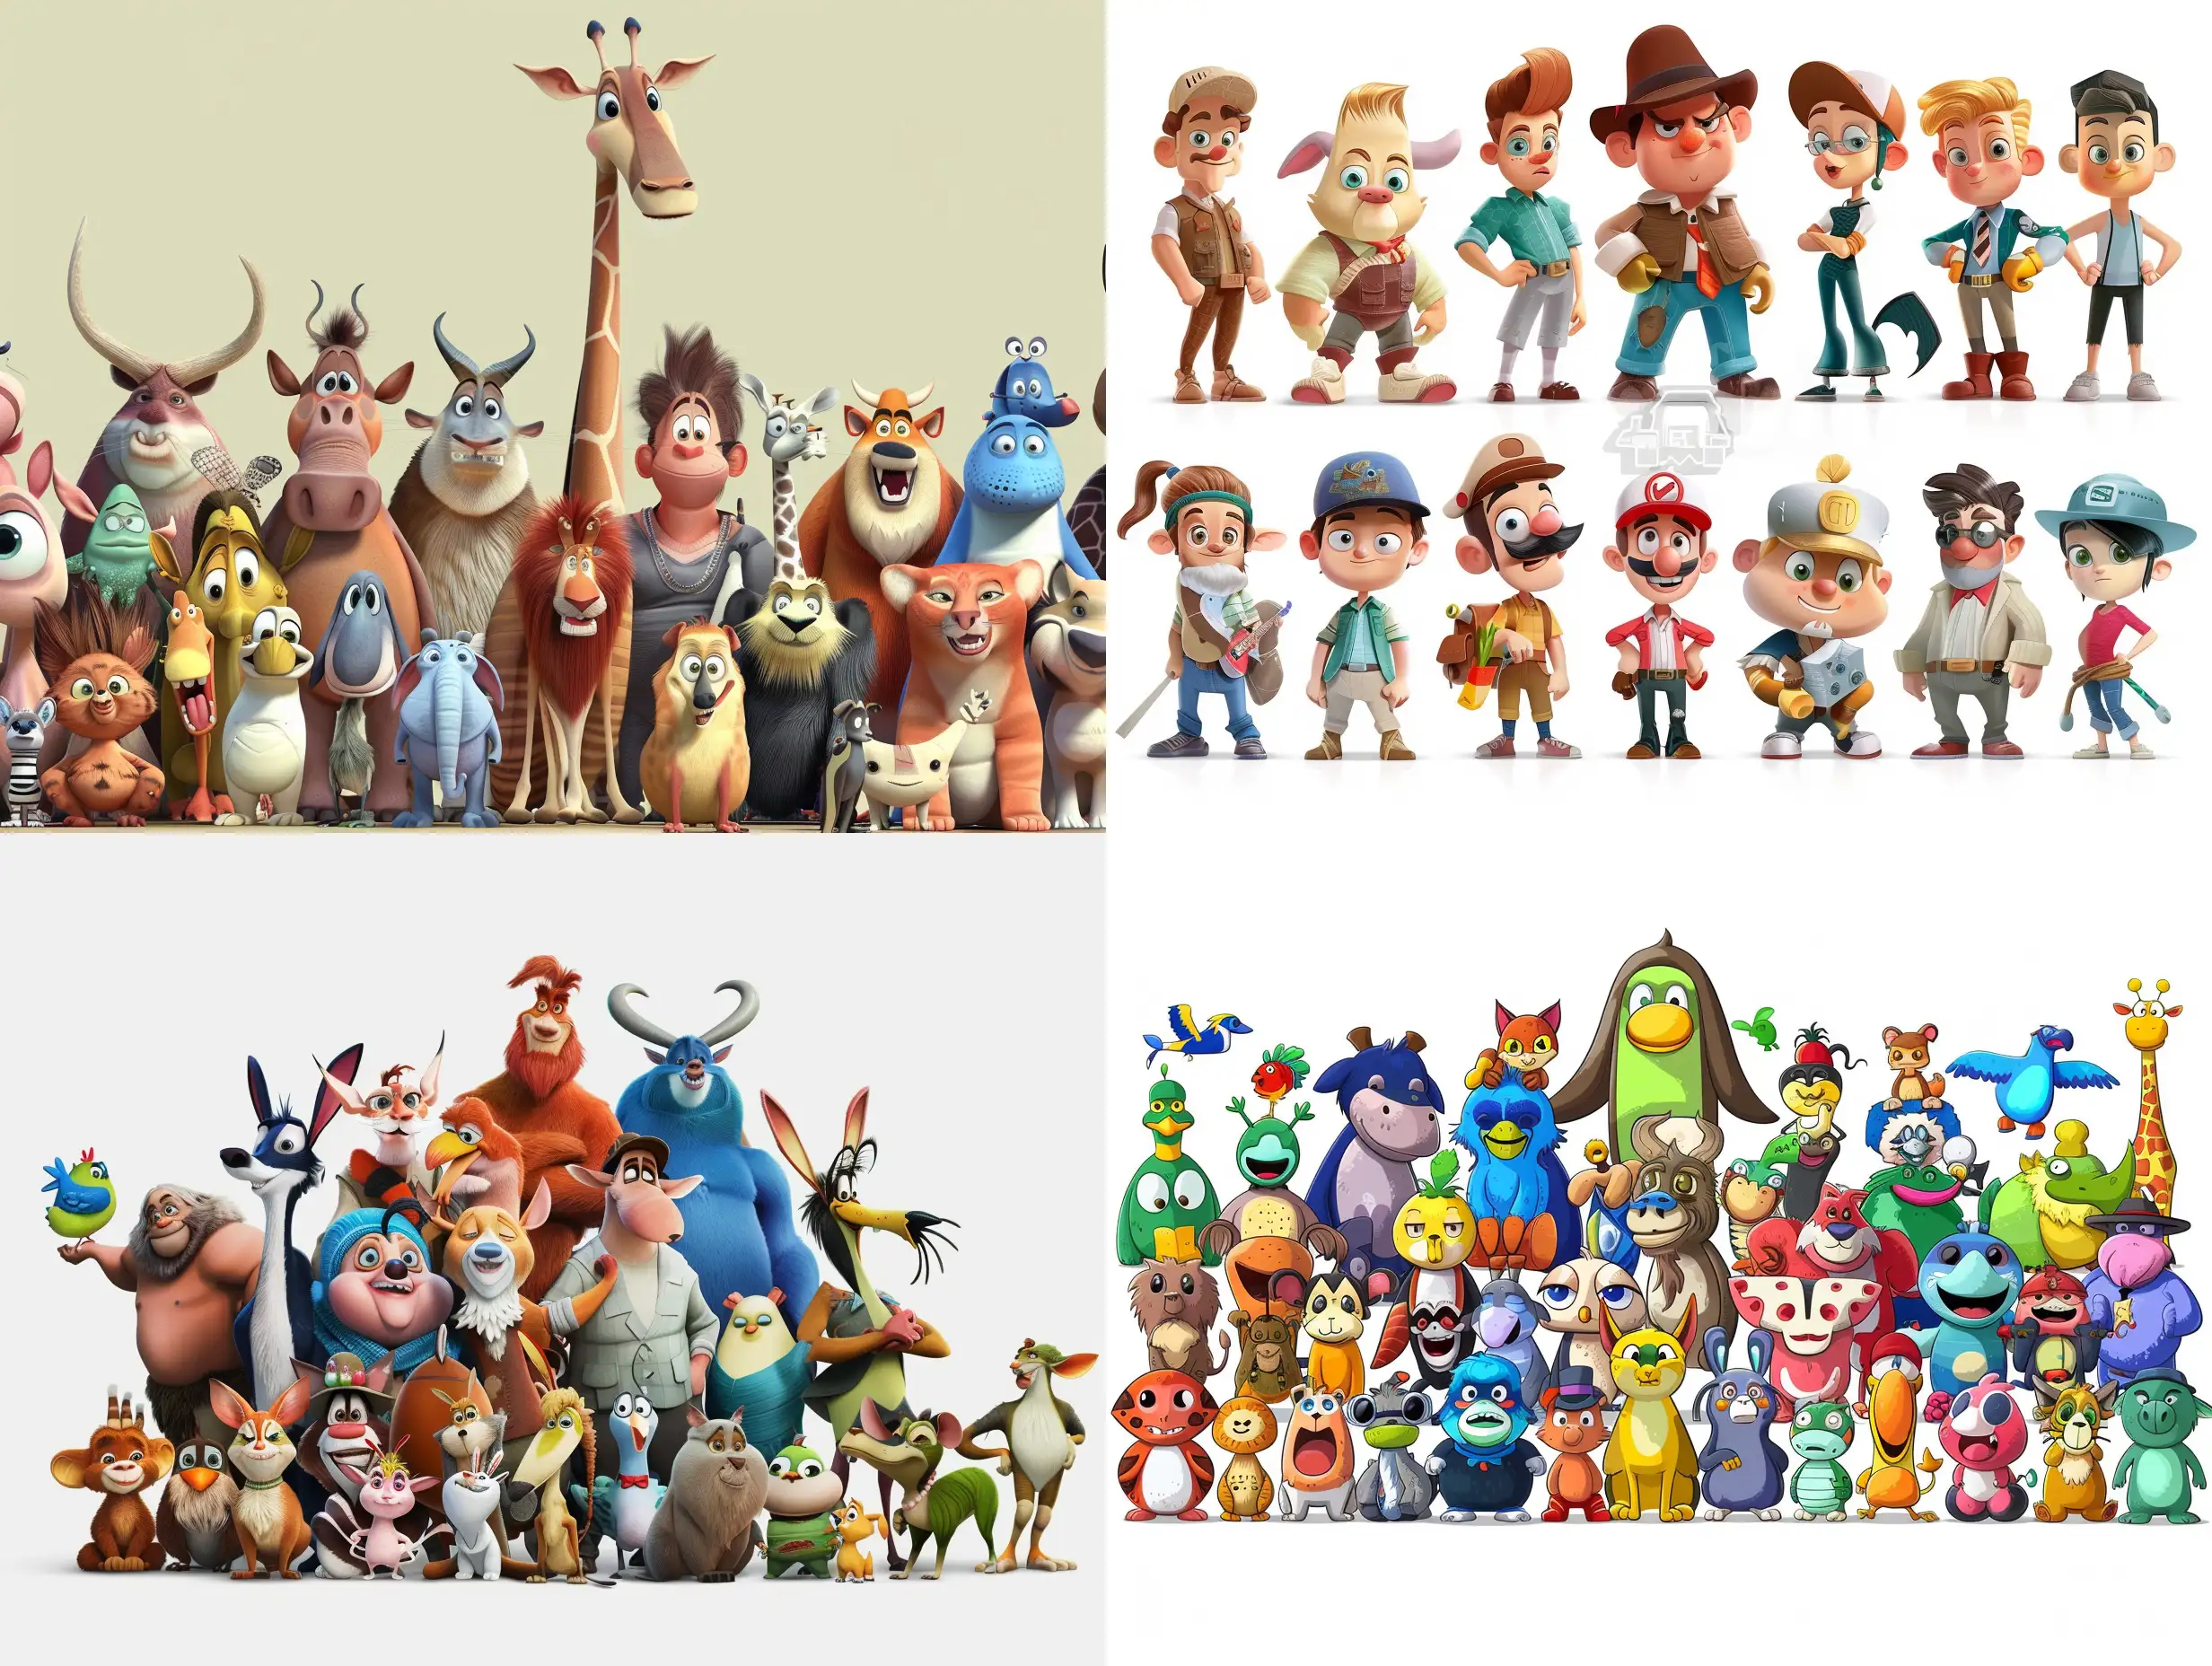 All cartoon characters